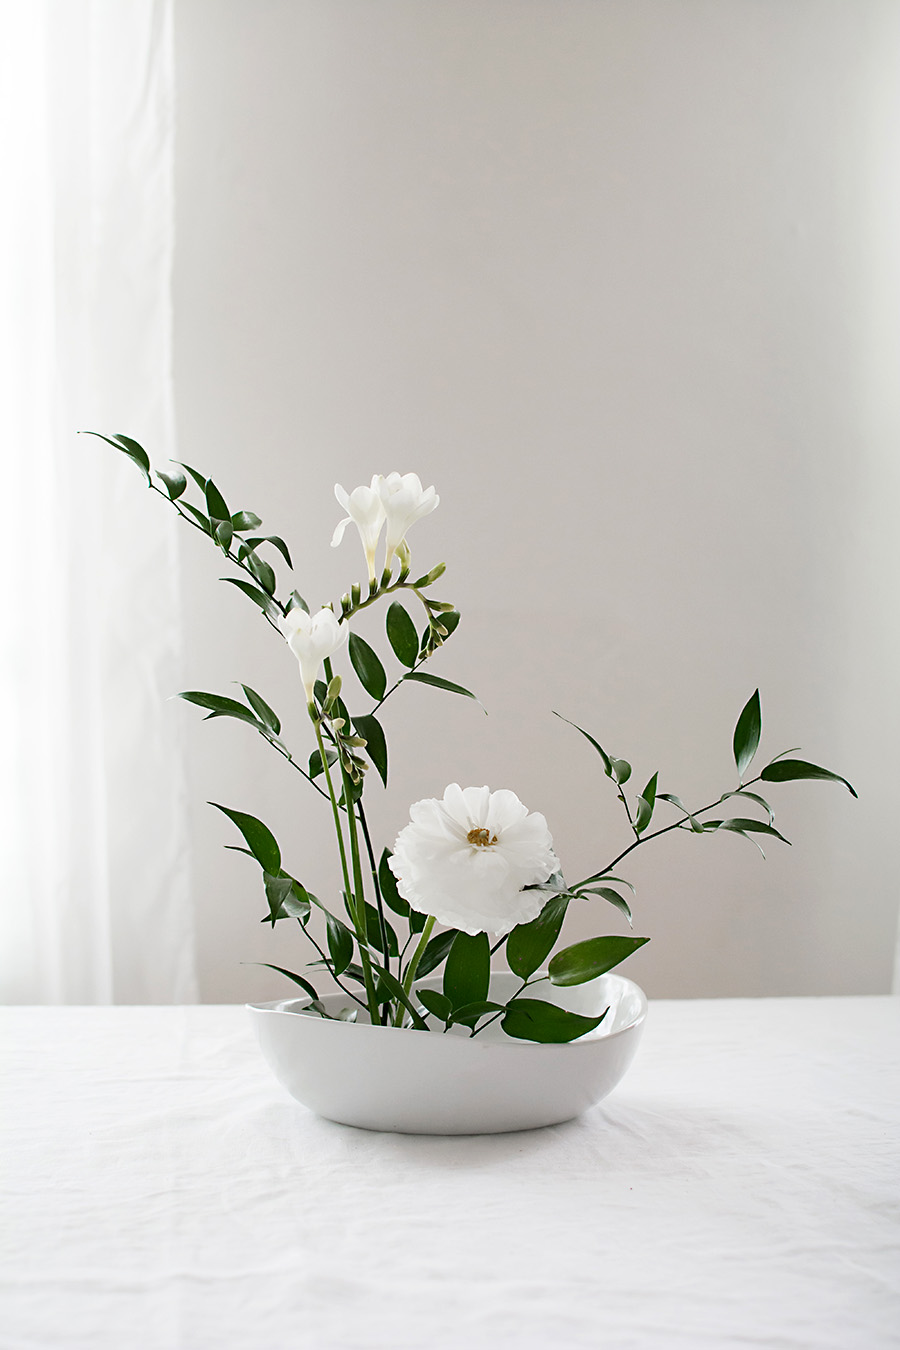 How To Make A Basic Ikebana Floral Arrangement Homey Oh My